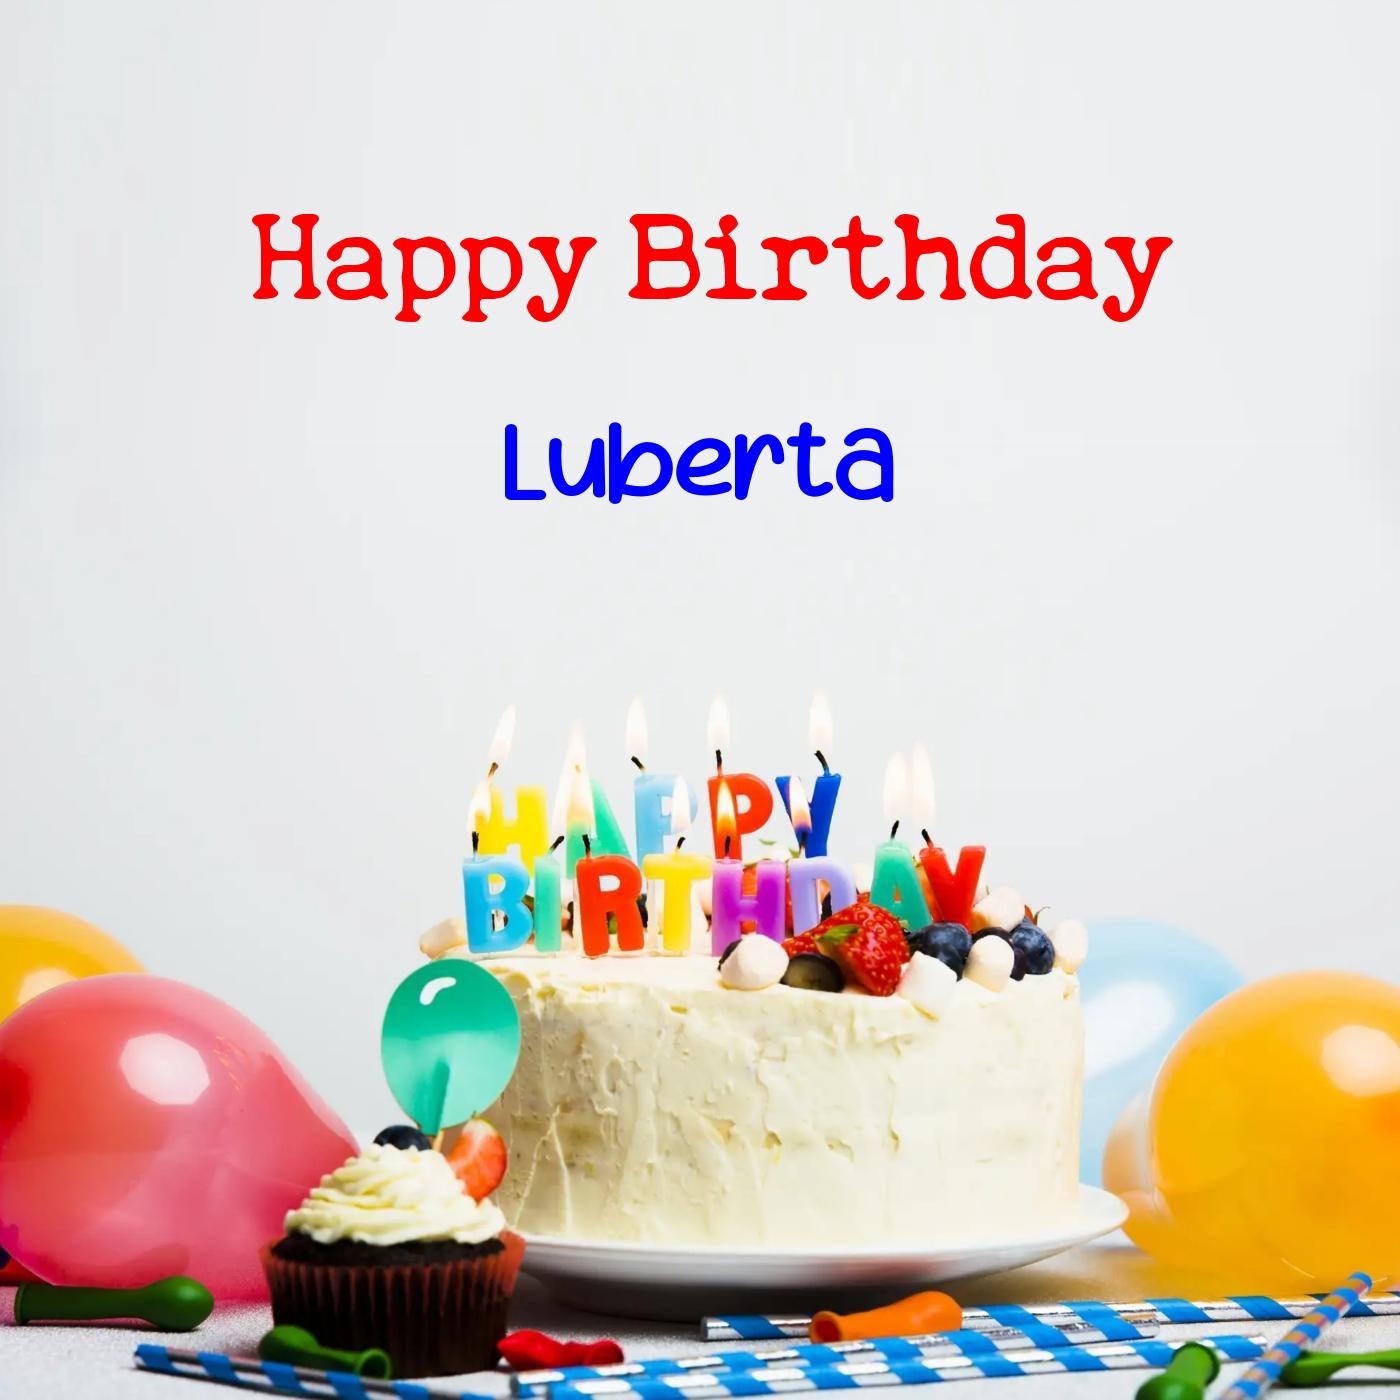 Happy Birthday Luberta Cake Balloons Card